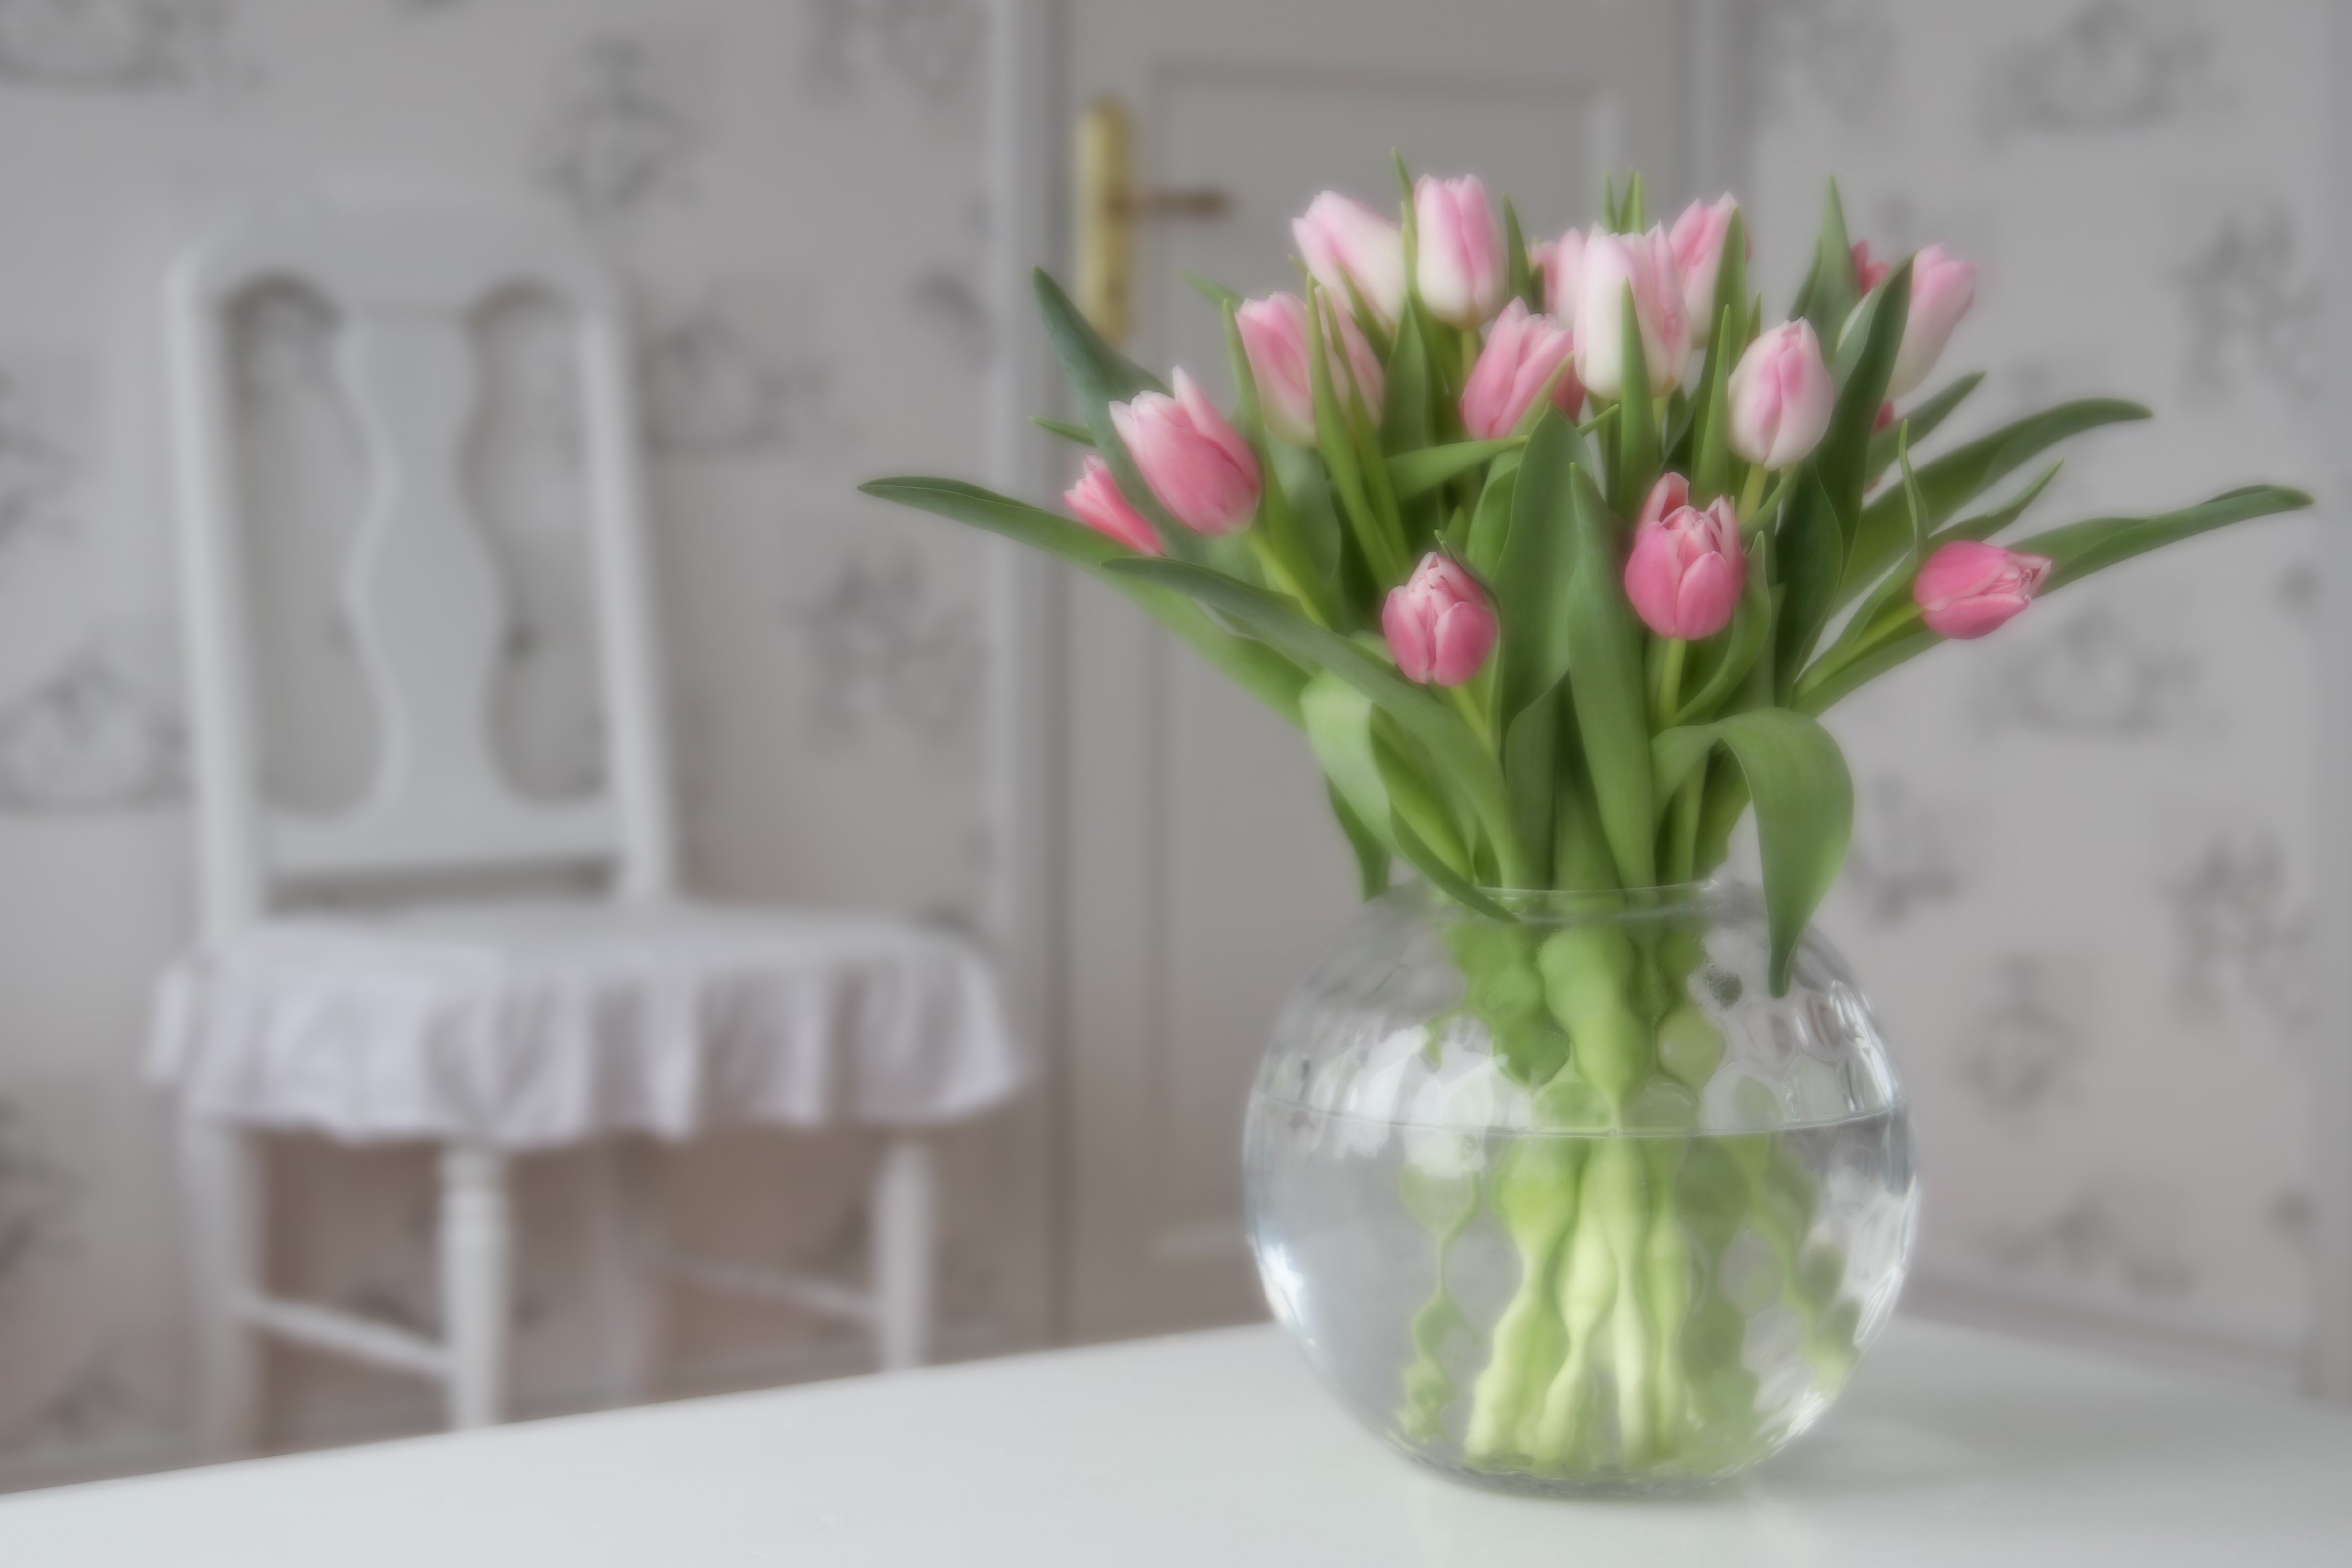 Фото тюльпаны в вазе на столе. Тюльпаны в вазе. Букет тюльпанов. Букет тюльпанов в вазе. Розовые тюльпаны в вазе.